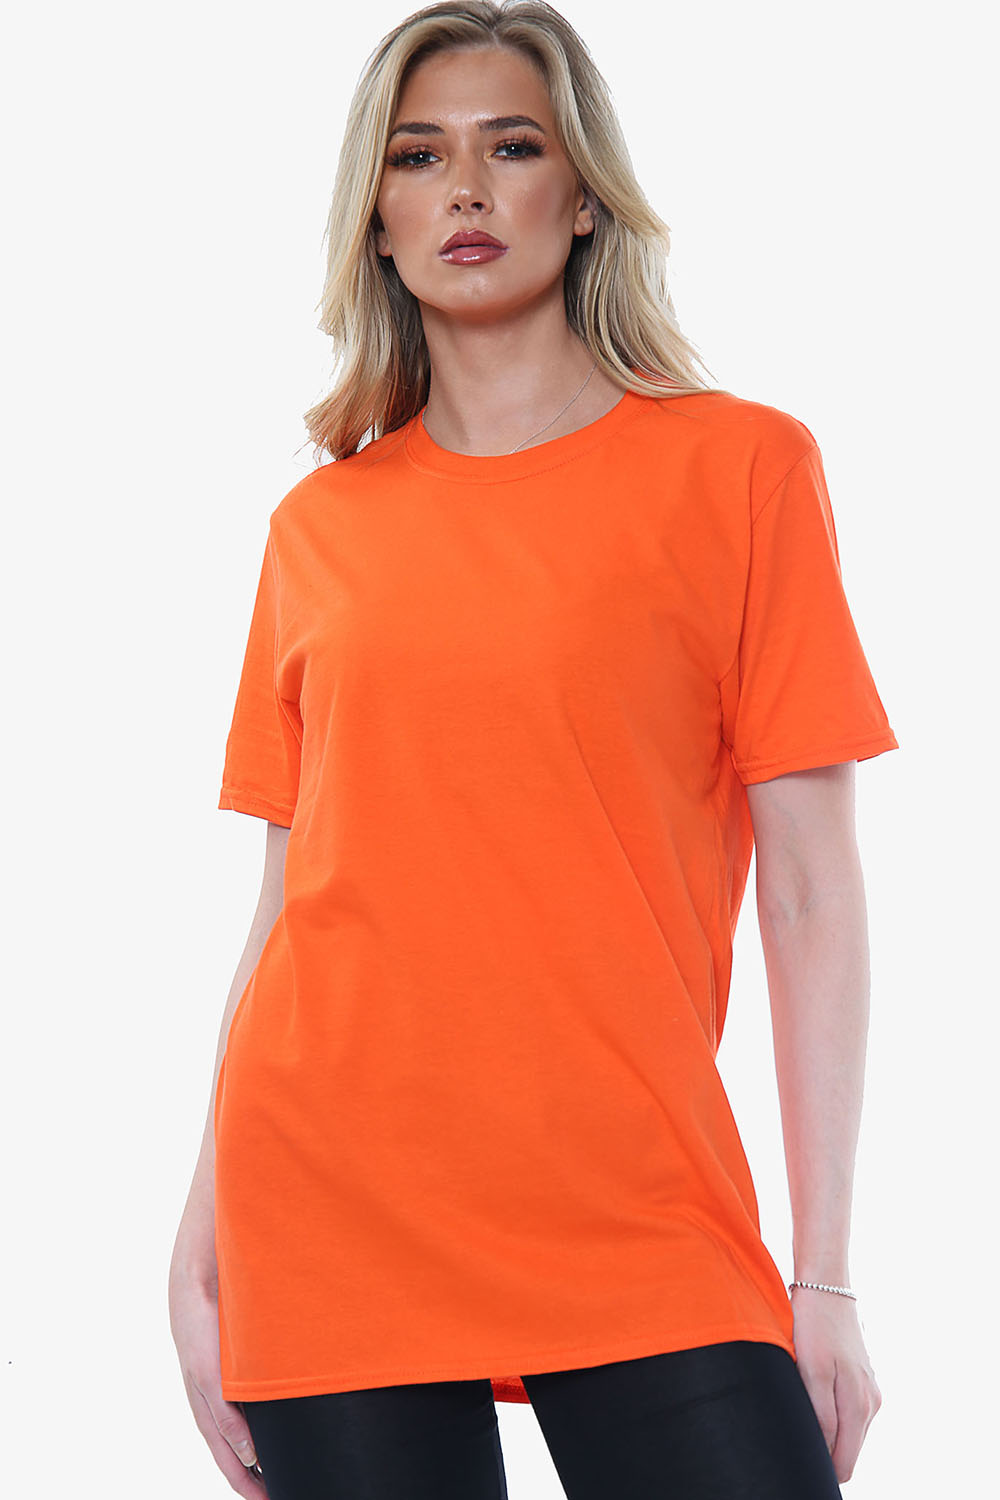 Softstyle Plain T-Shirt in Orange (Custom Pack)